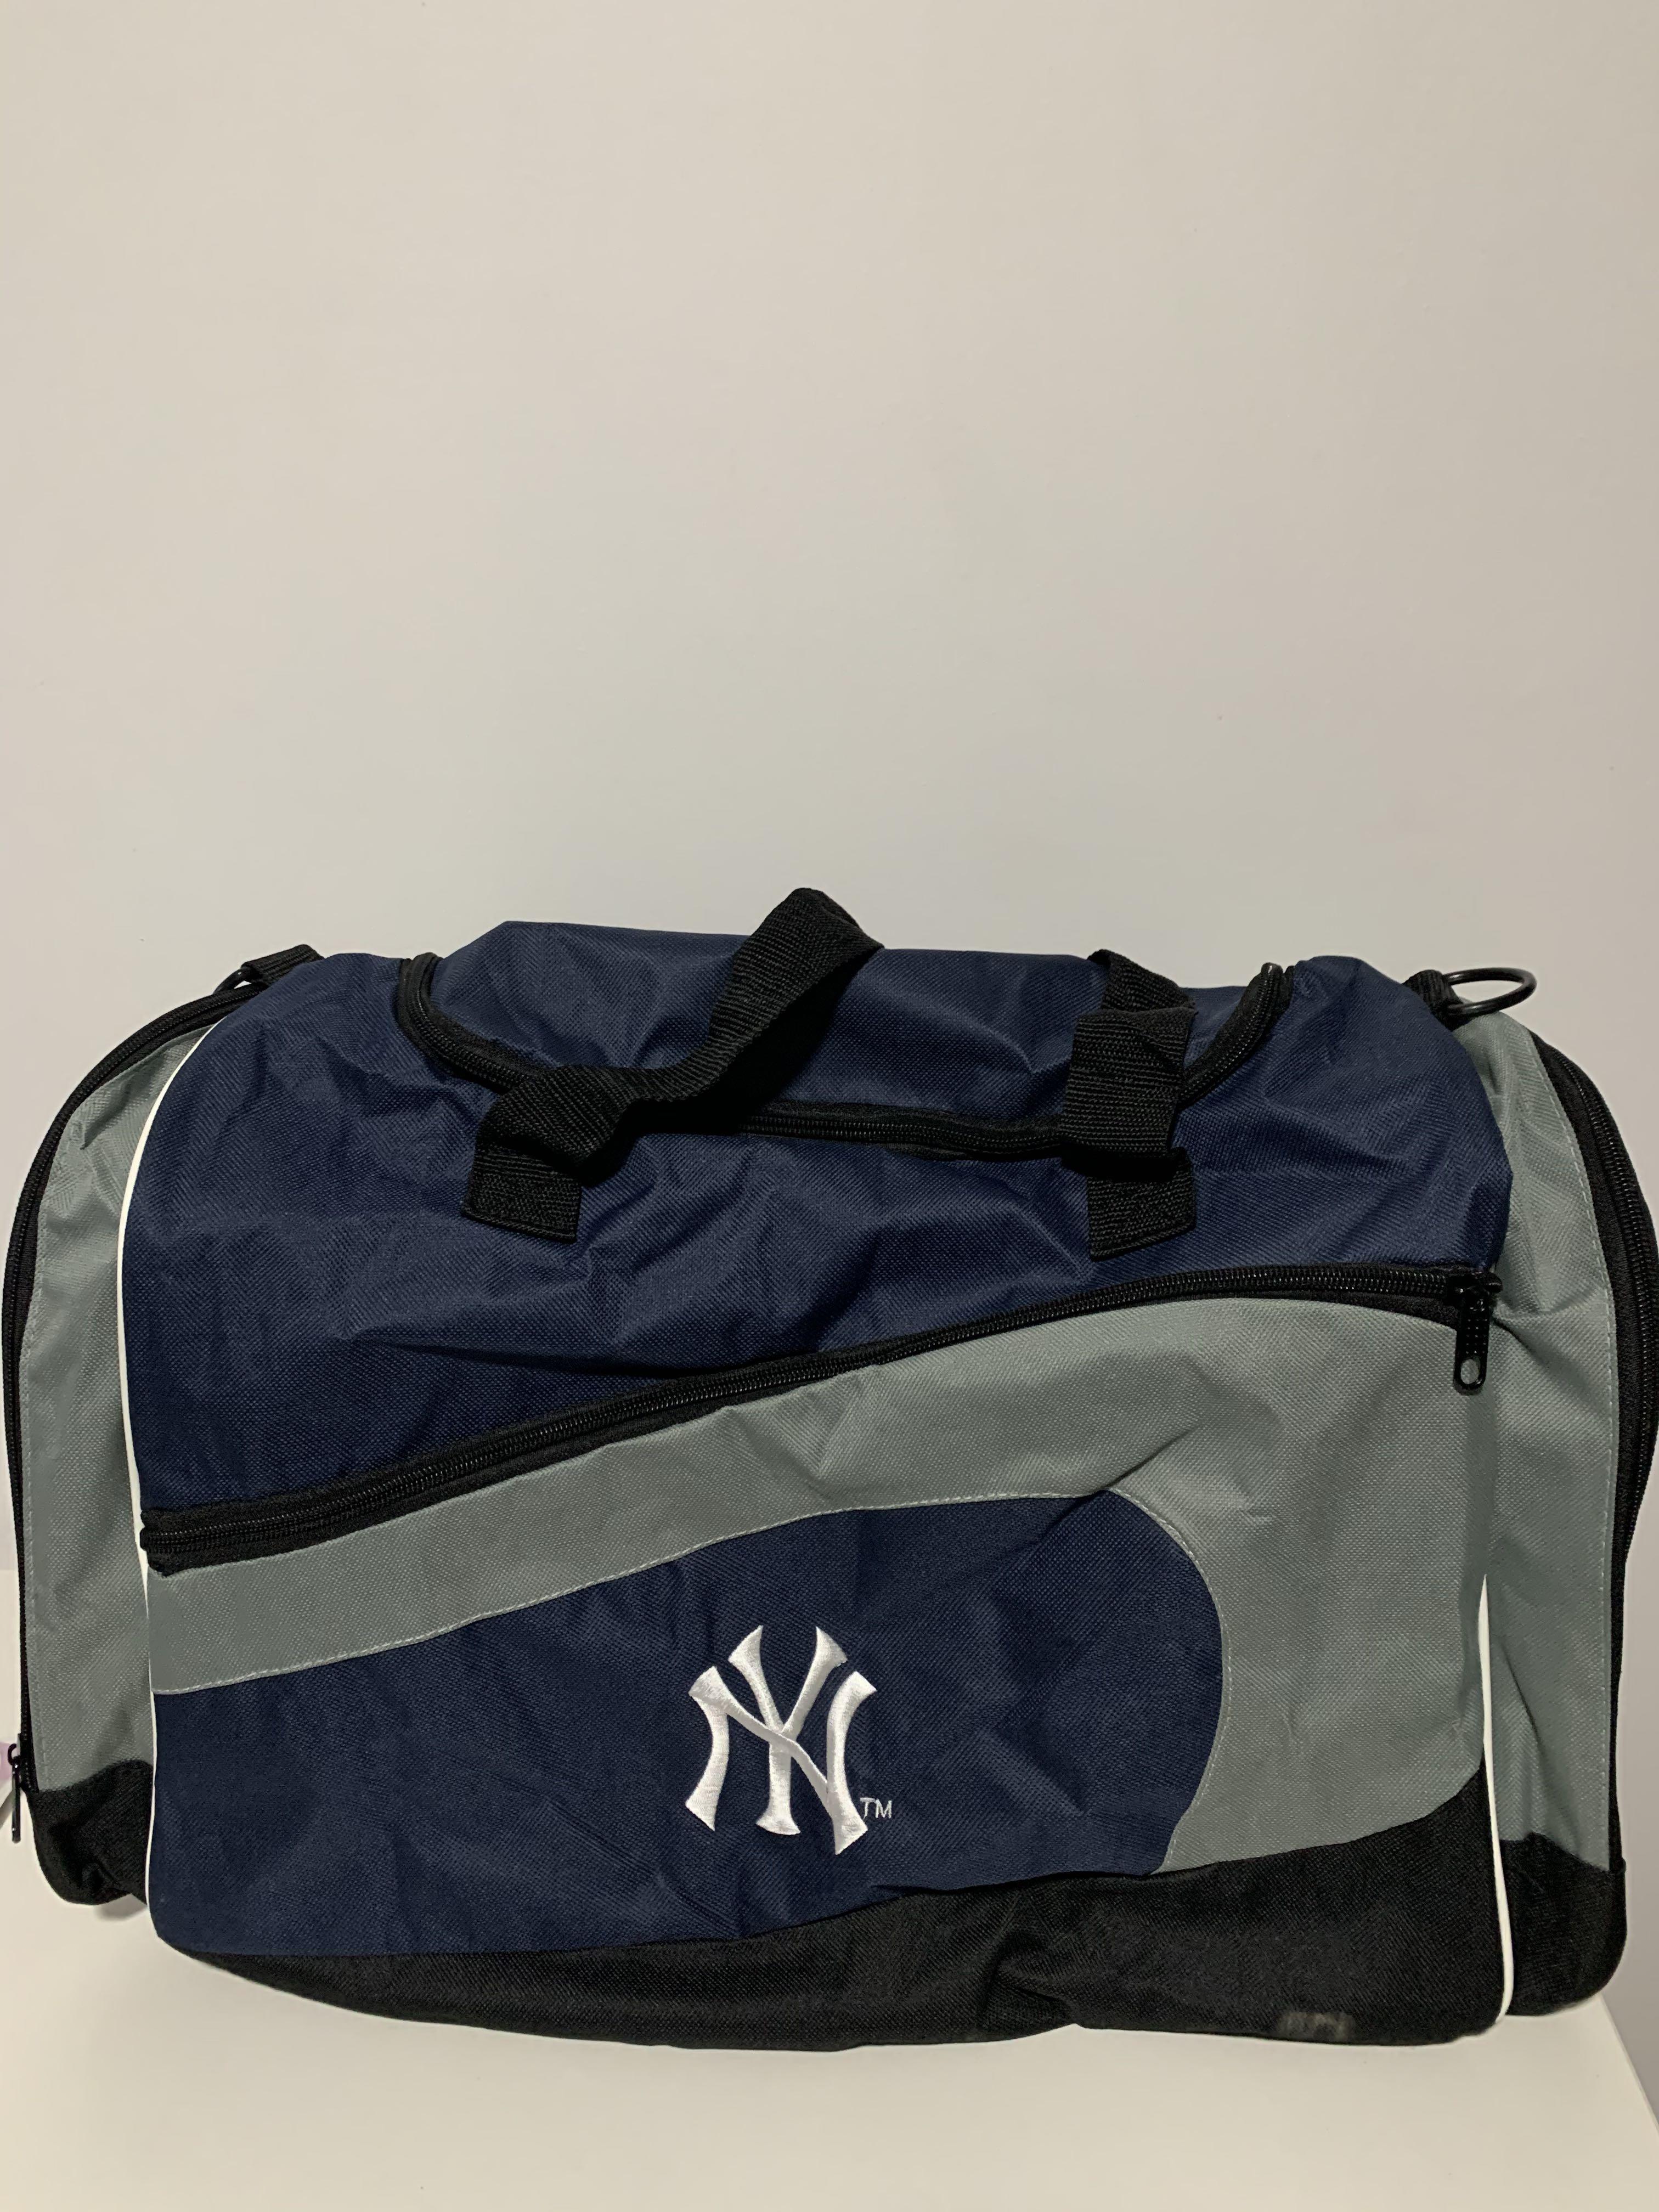 MLB New York Yankees 18 Litre Duffel Bag Duffle Weekender